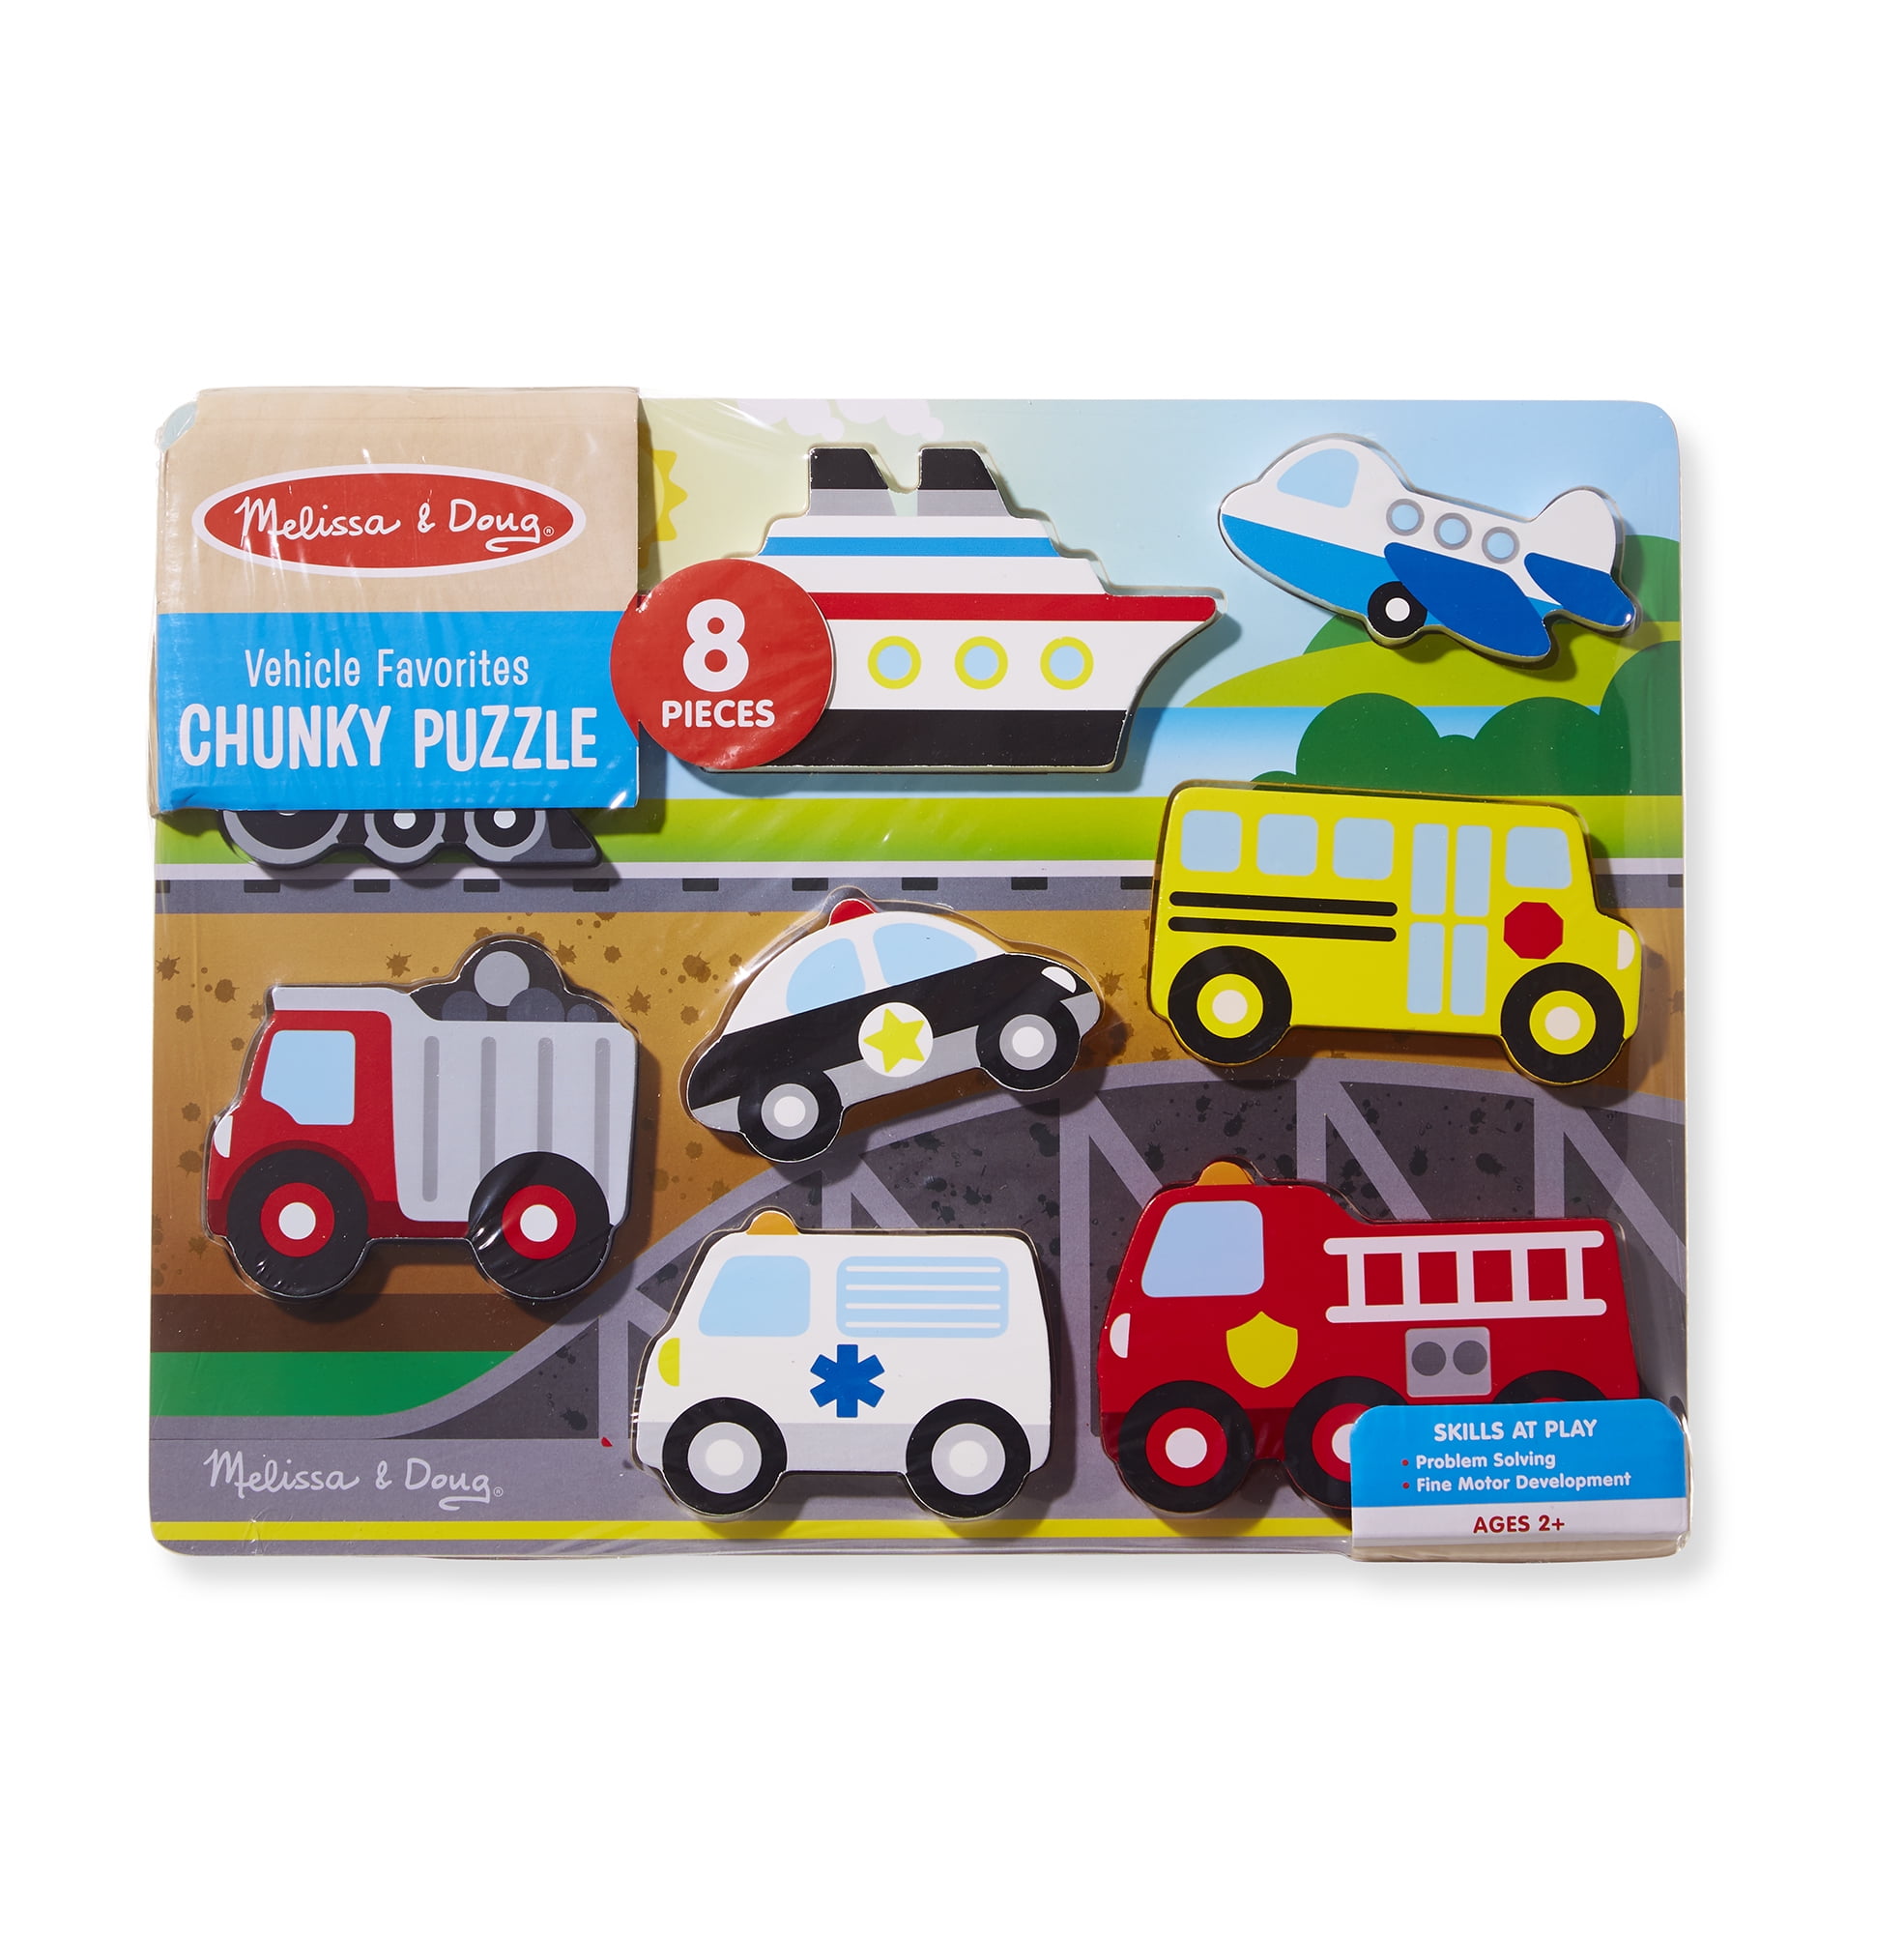 Melissa & Doug Wooden 8-Piece Vehicle Favorites Chunky Puzzle - Walmart